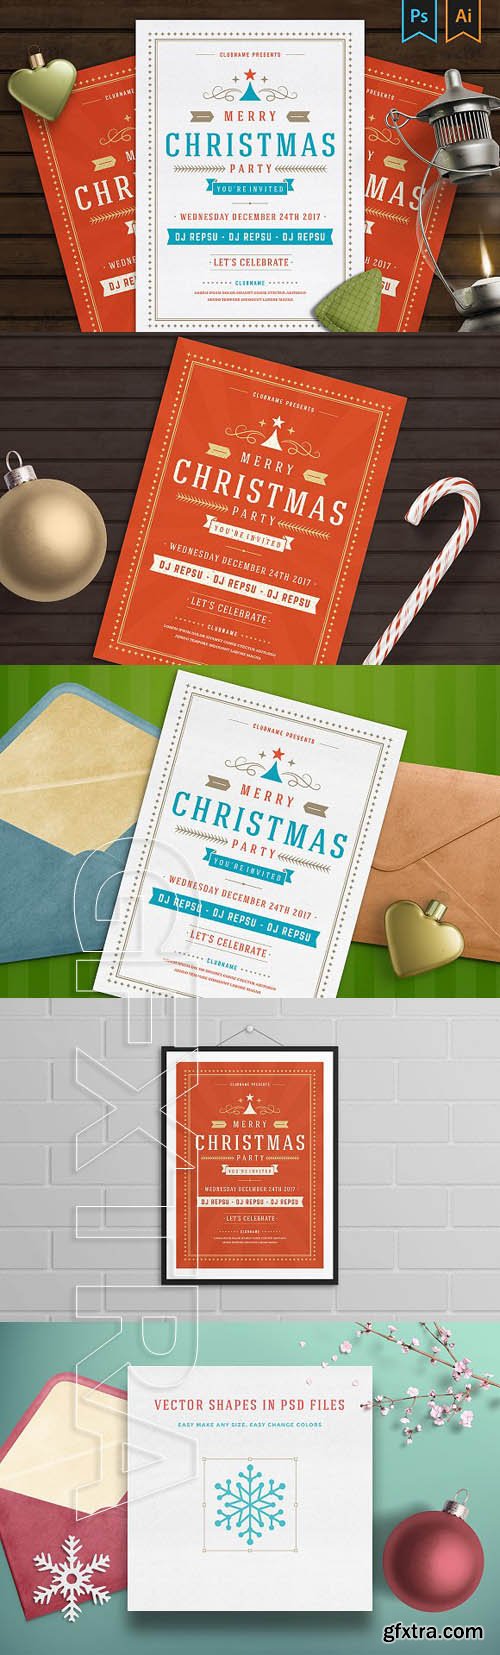 CreativeMarket - Christmas party invitation flyer 1903665